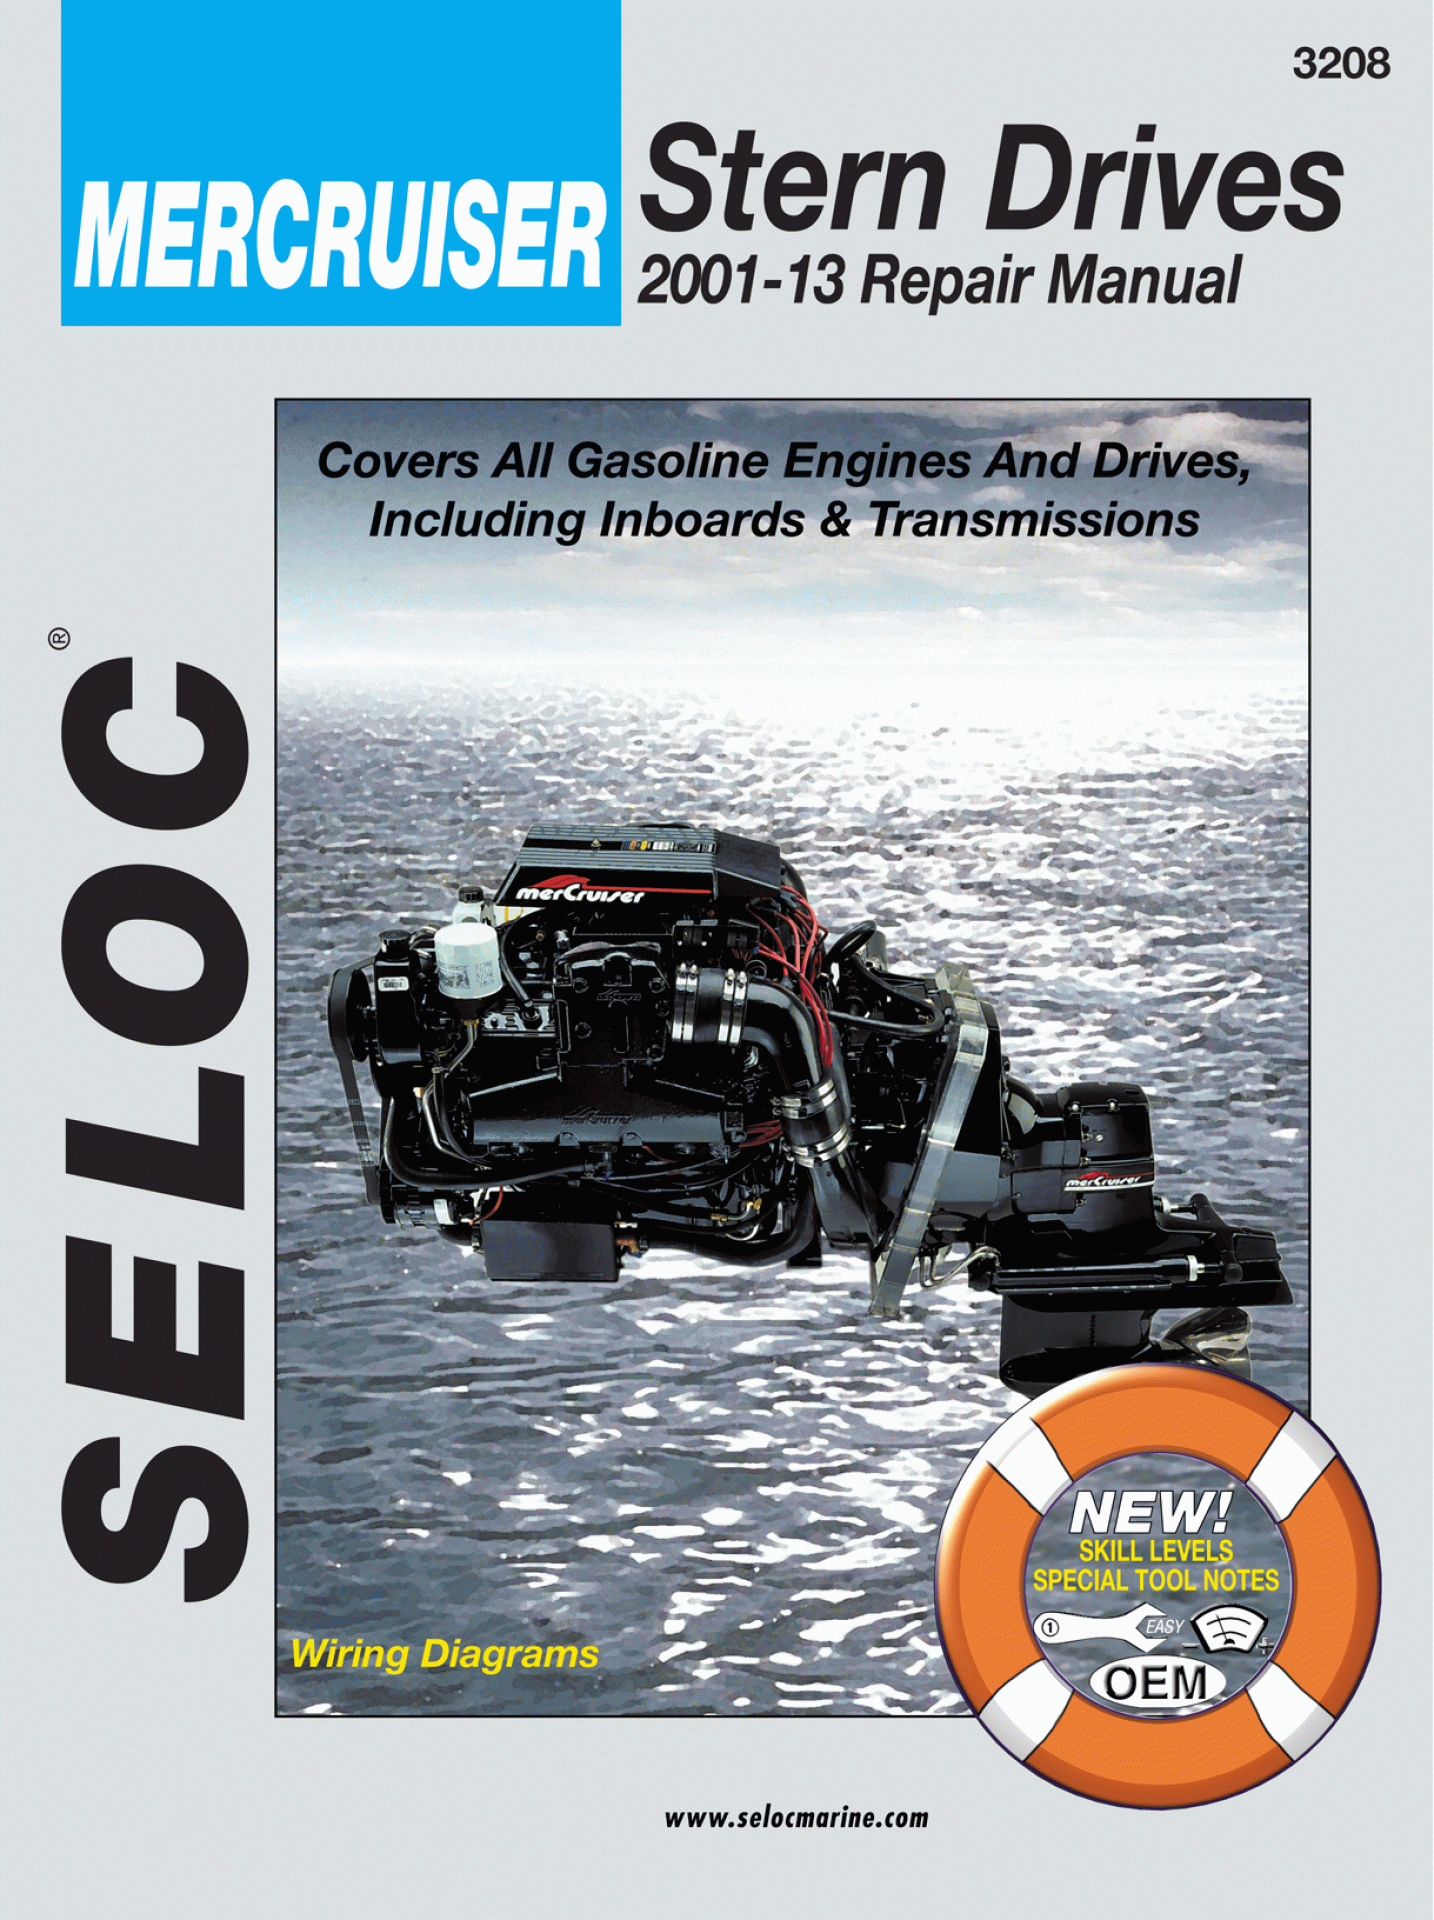 SELOC PUBLISHING | 18-03208 | REPAIR MANUAL MerCruiser Stern Drive/Inboard 2001-13